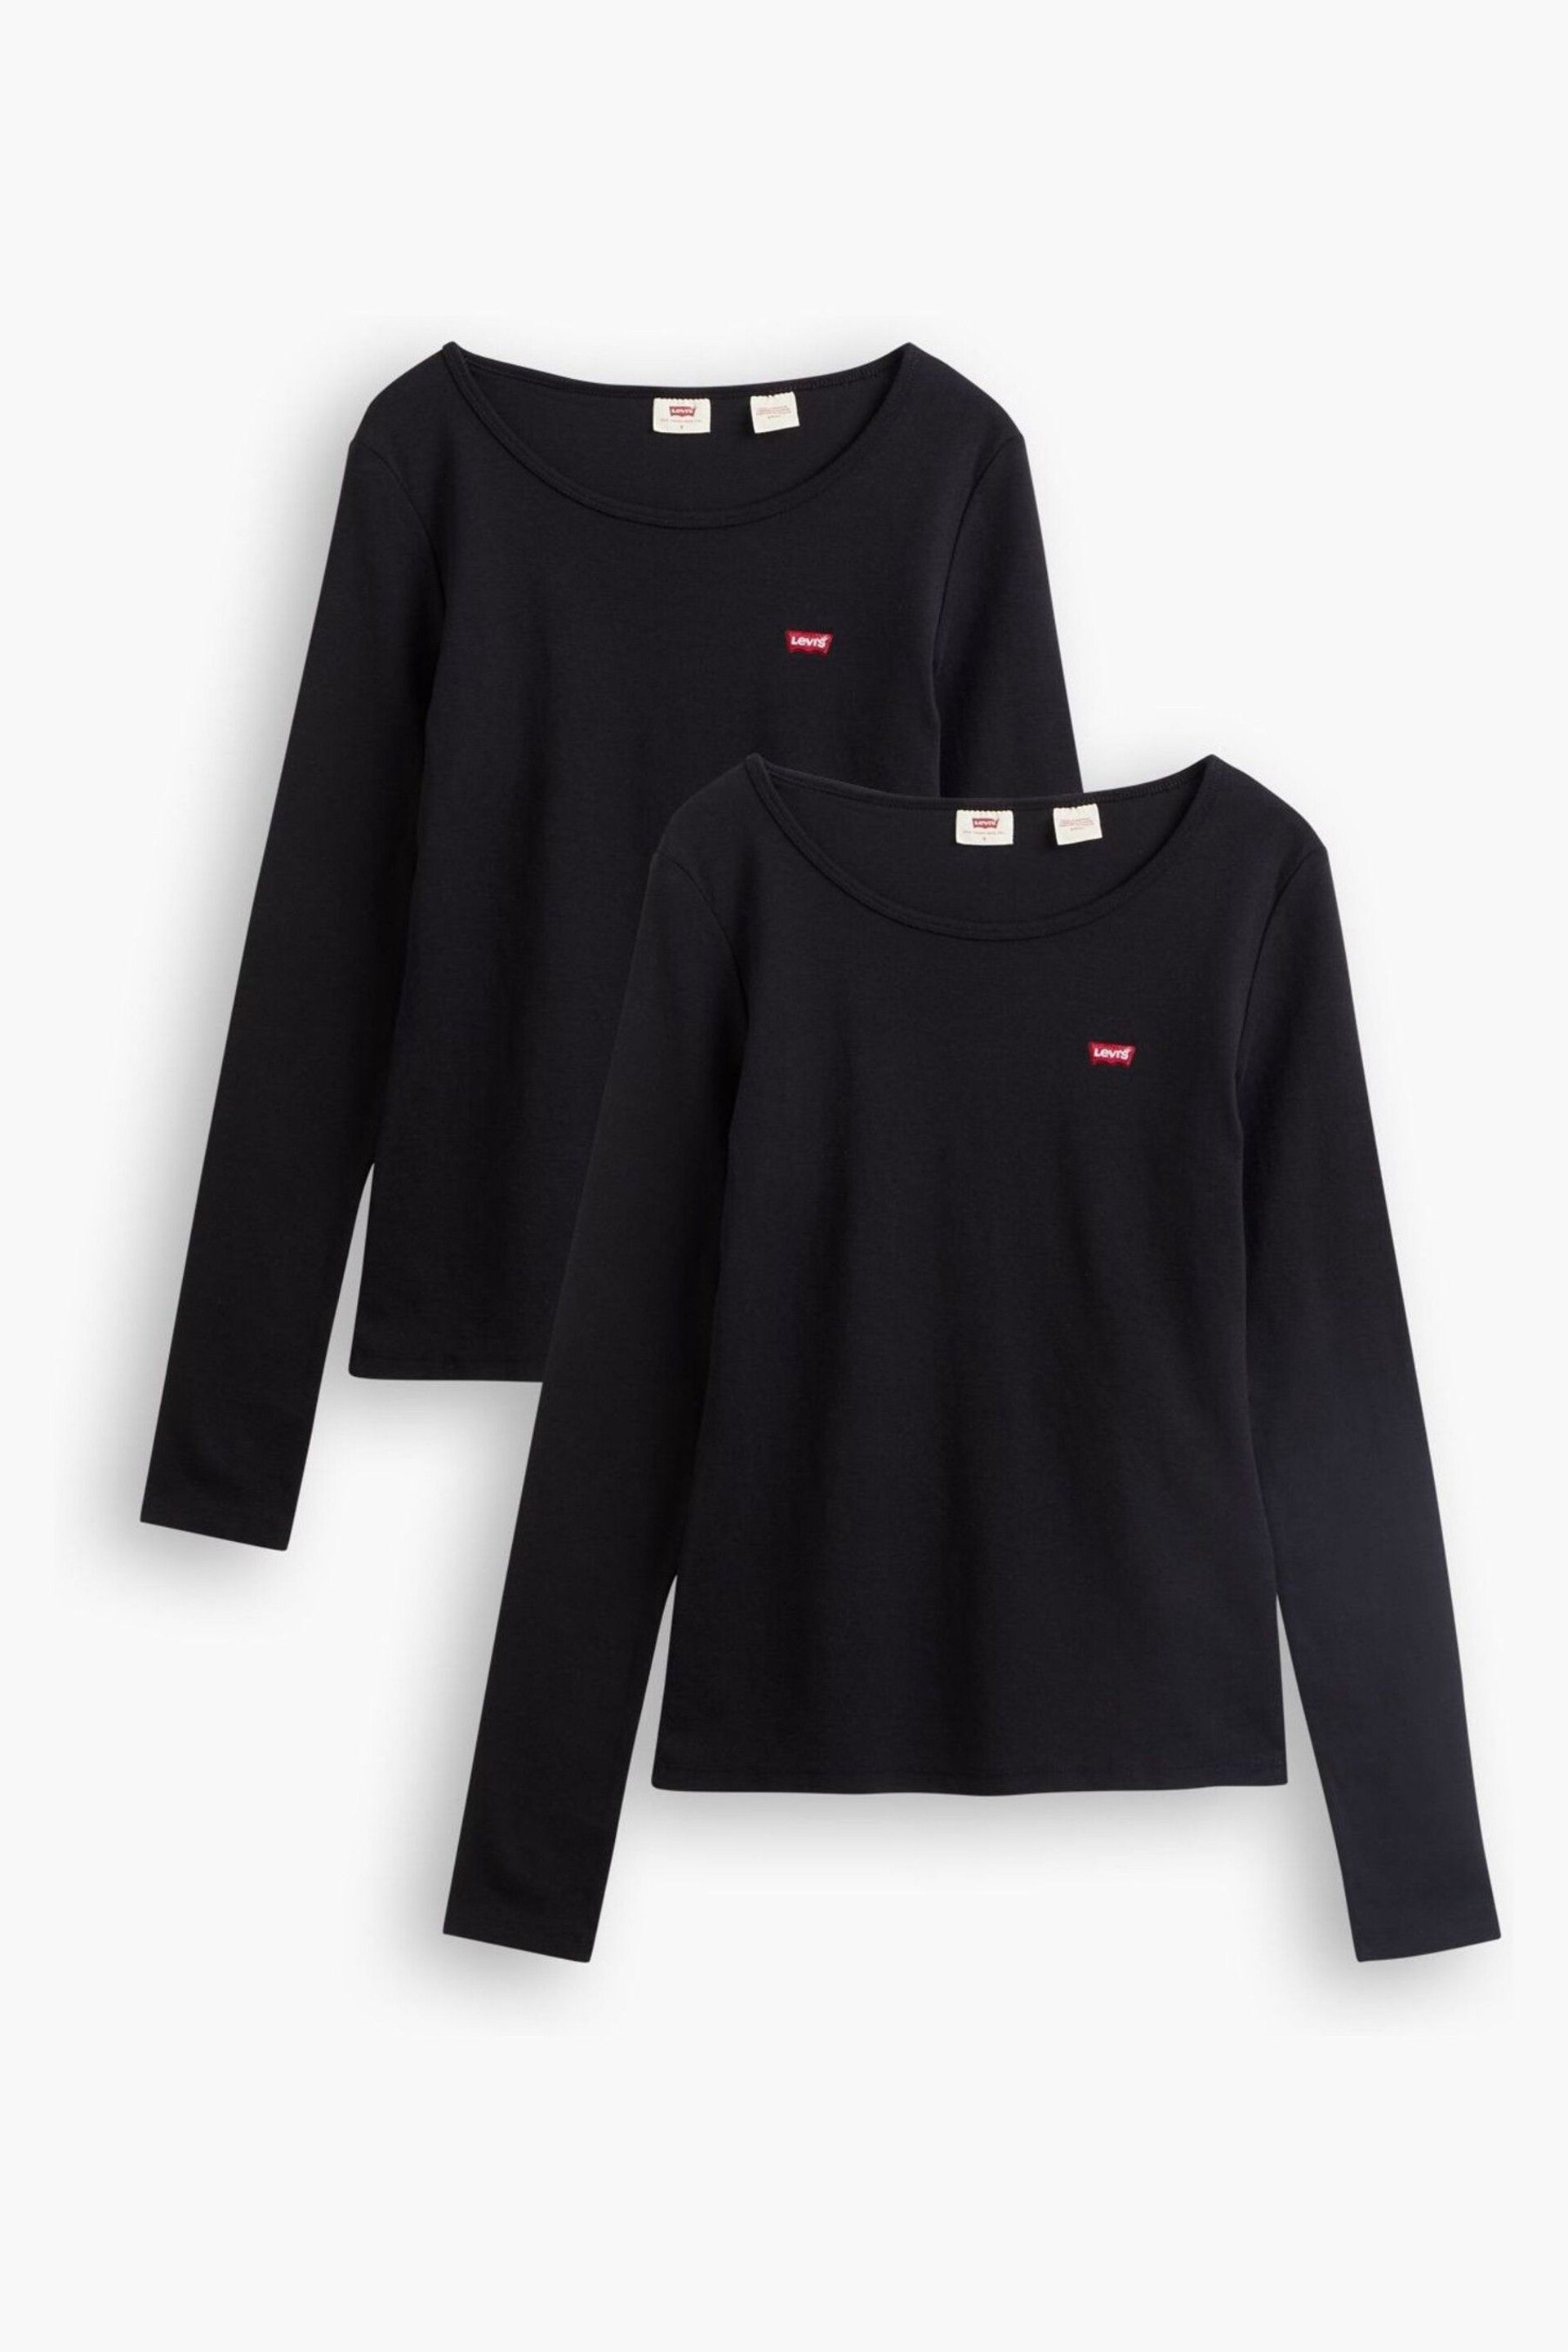 Levi's® Black Long Sleeve T-Shirts 2 Pack - Image 4 of 5